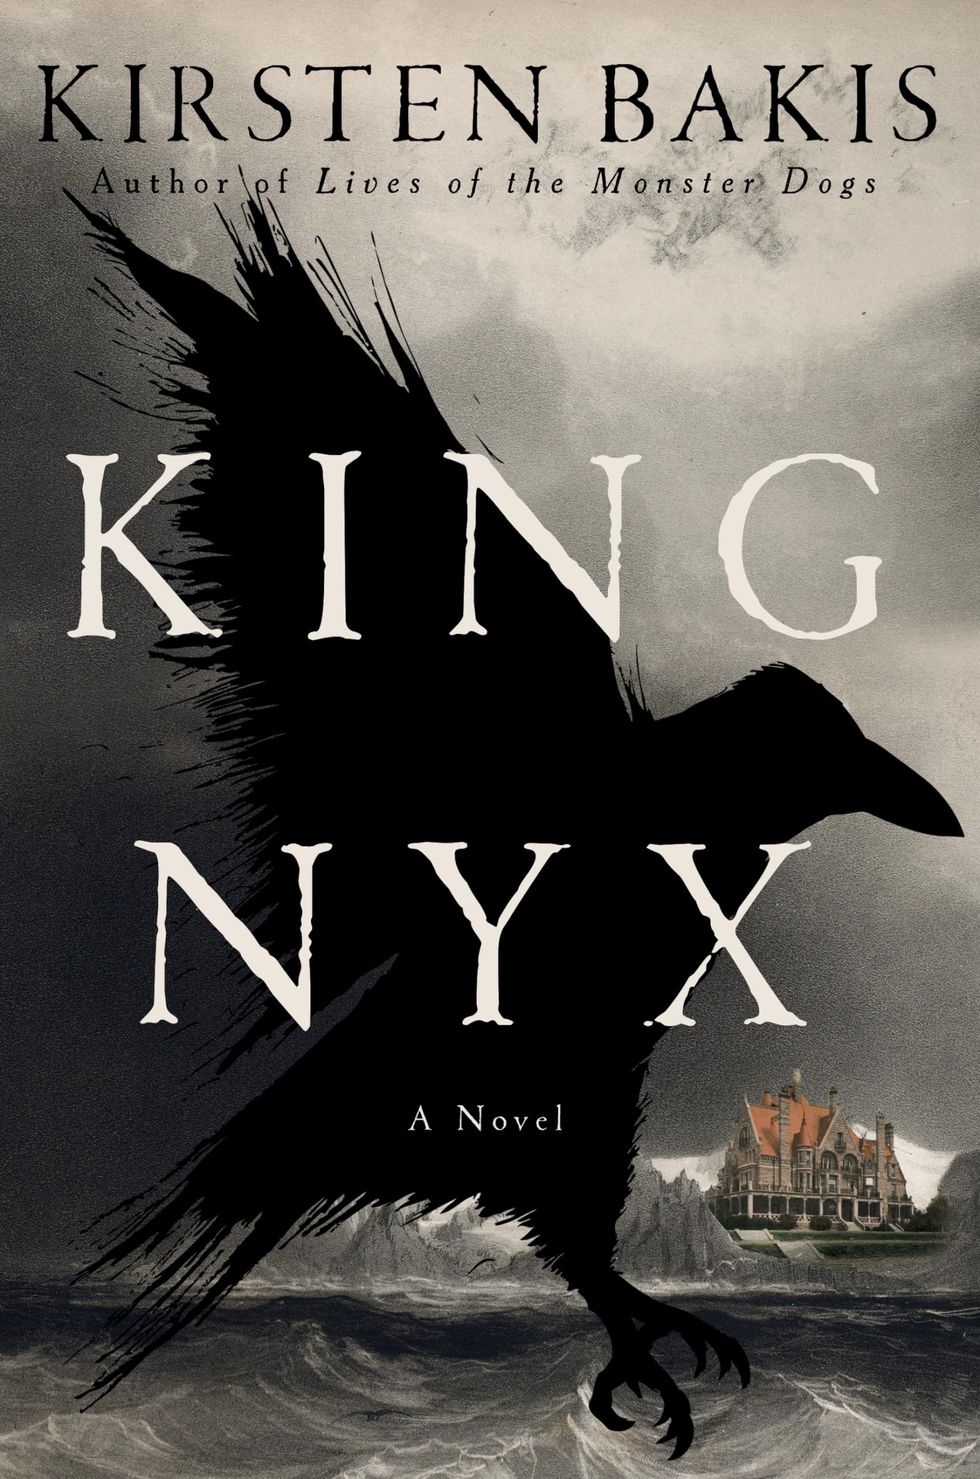 King Nyx, by Kirsten Bakis